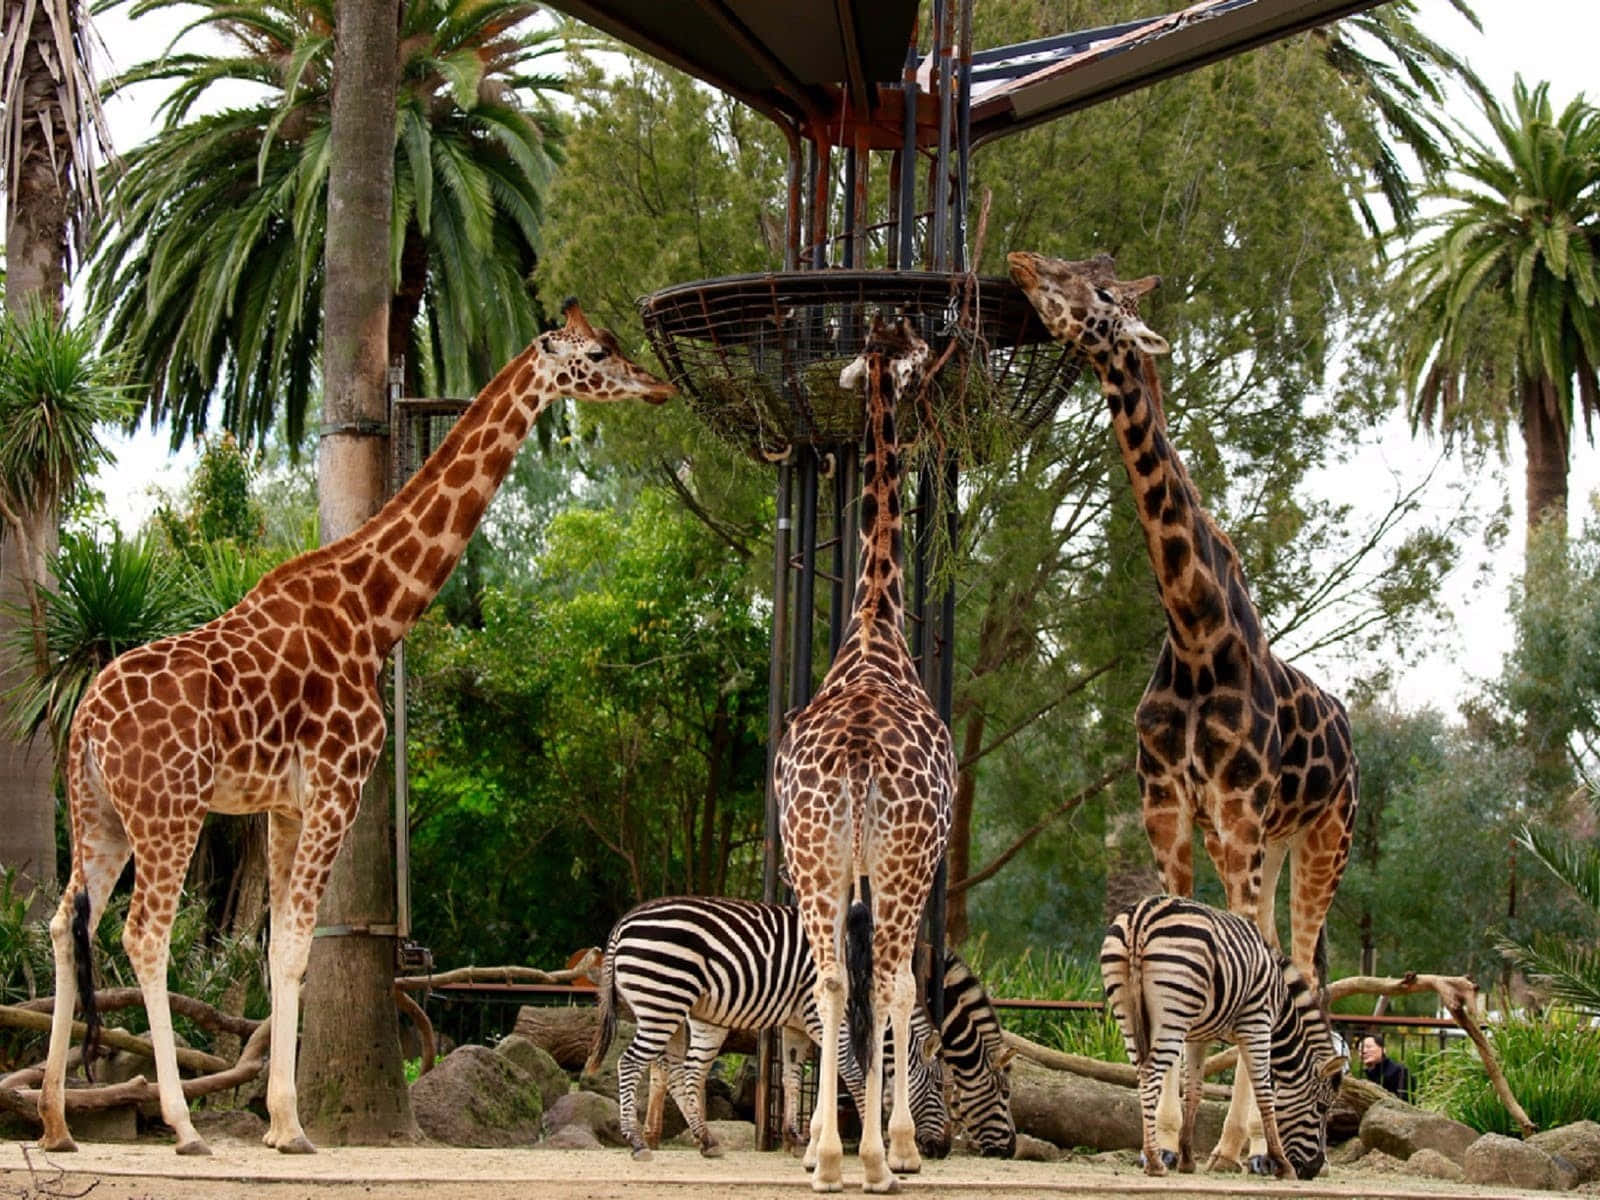 Giraffesand Zebrasat Melbourne Zoo Wallpaper